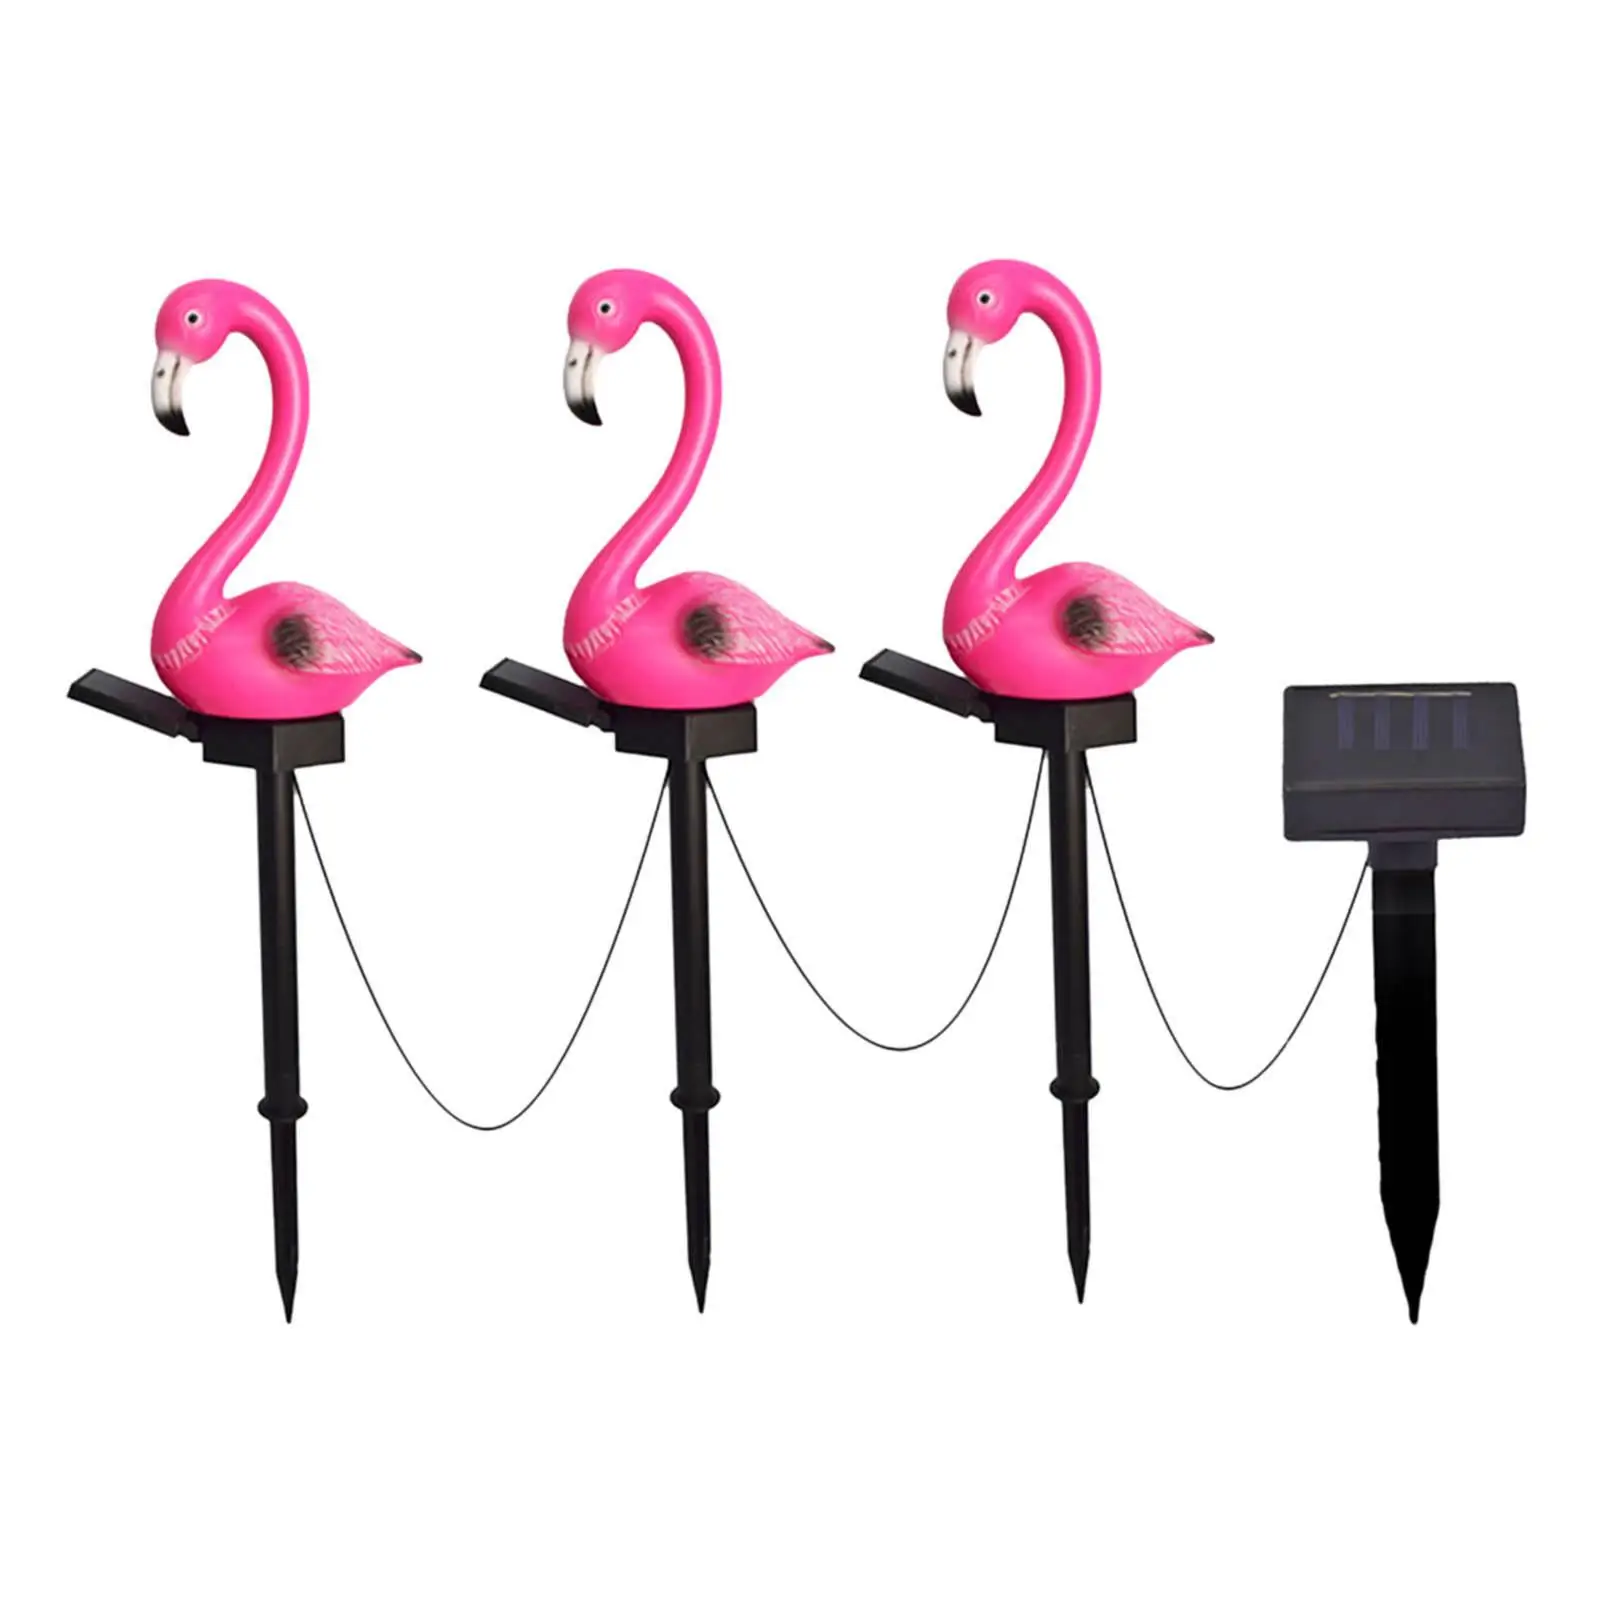 3Pcs Flamingo Waterproof Decorations Lawn Light for Home Lawn Patio Garden Backyard